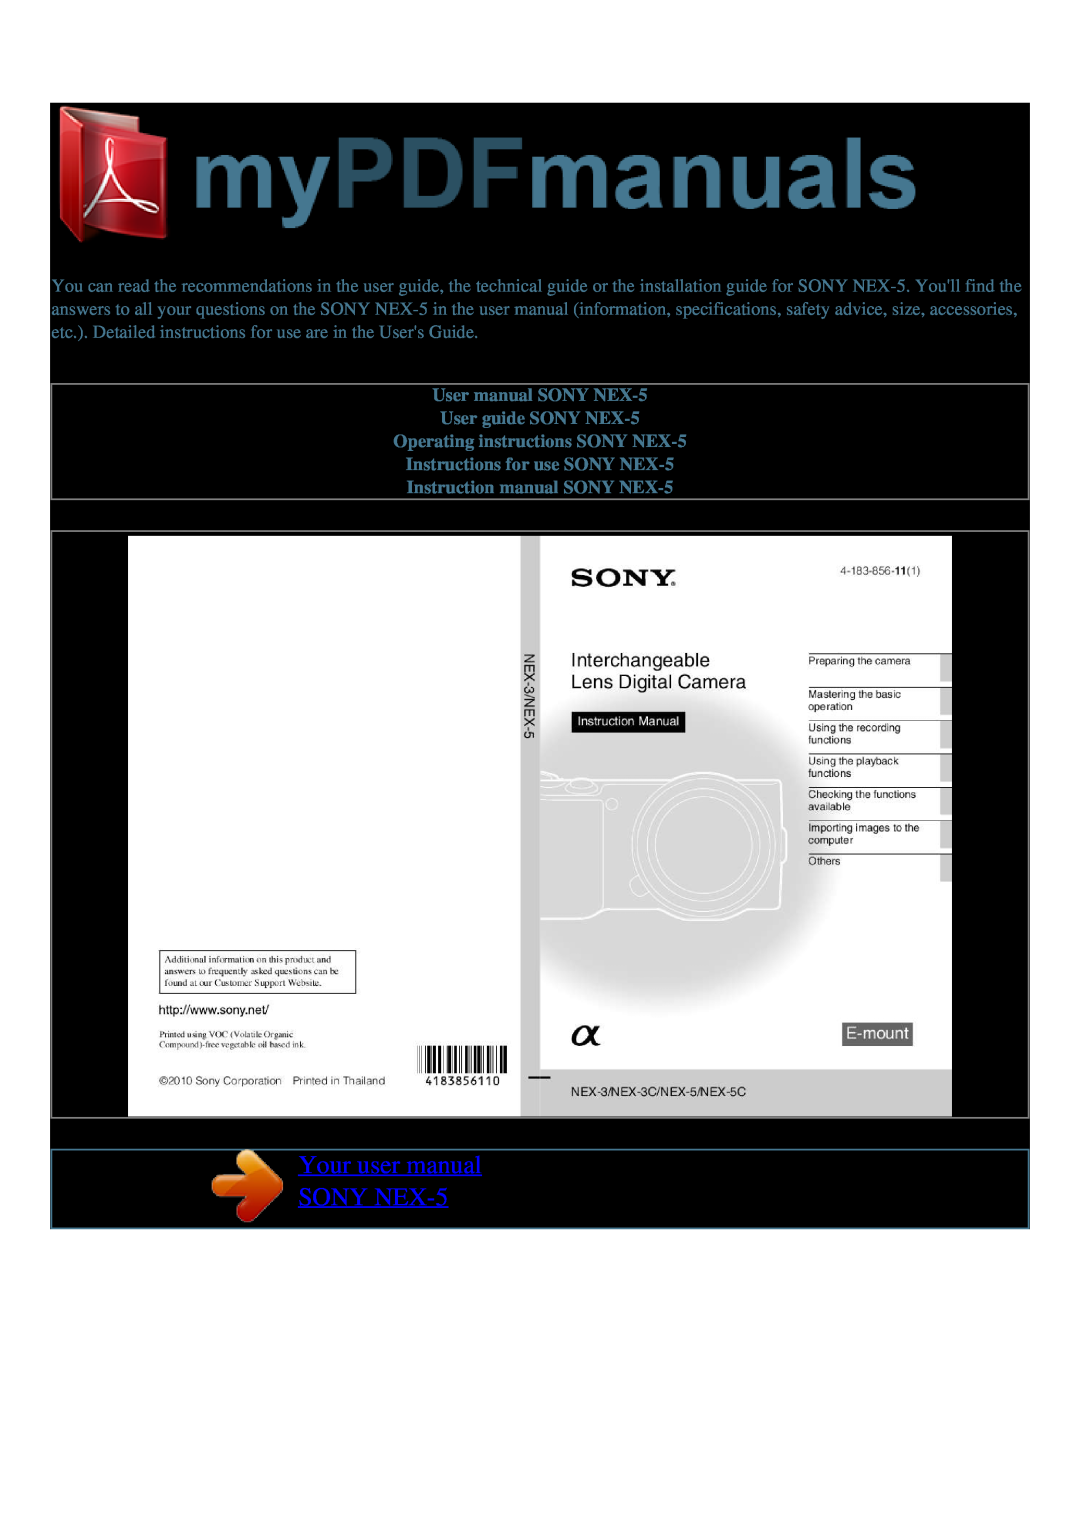 Sony NEX-3C, NEX-5C user manual Your user manual SONY NEX-5, User manual SONY NEX-5 User guide SONY NEX-5 